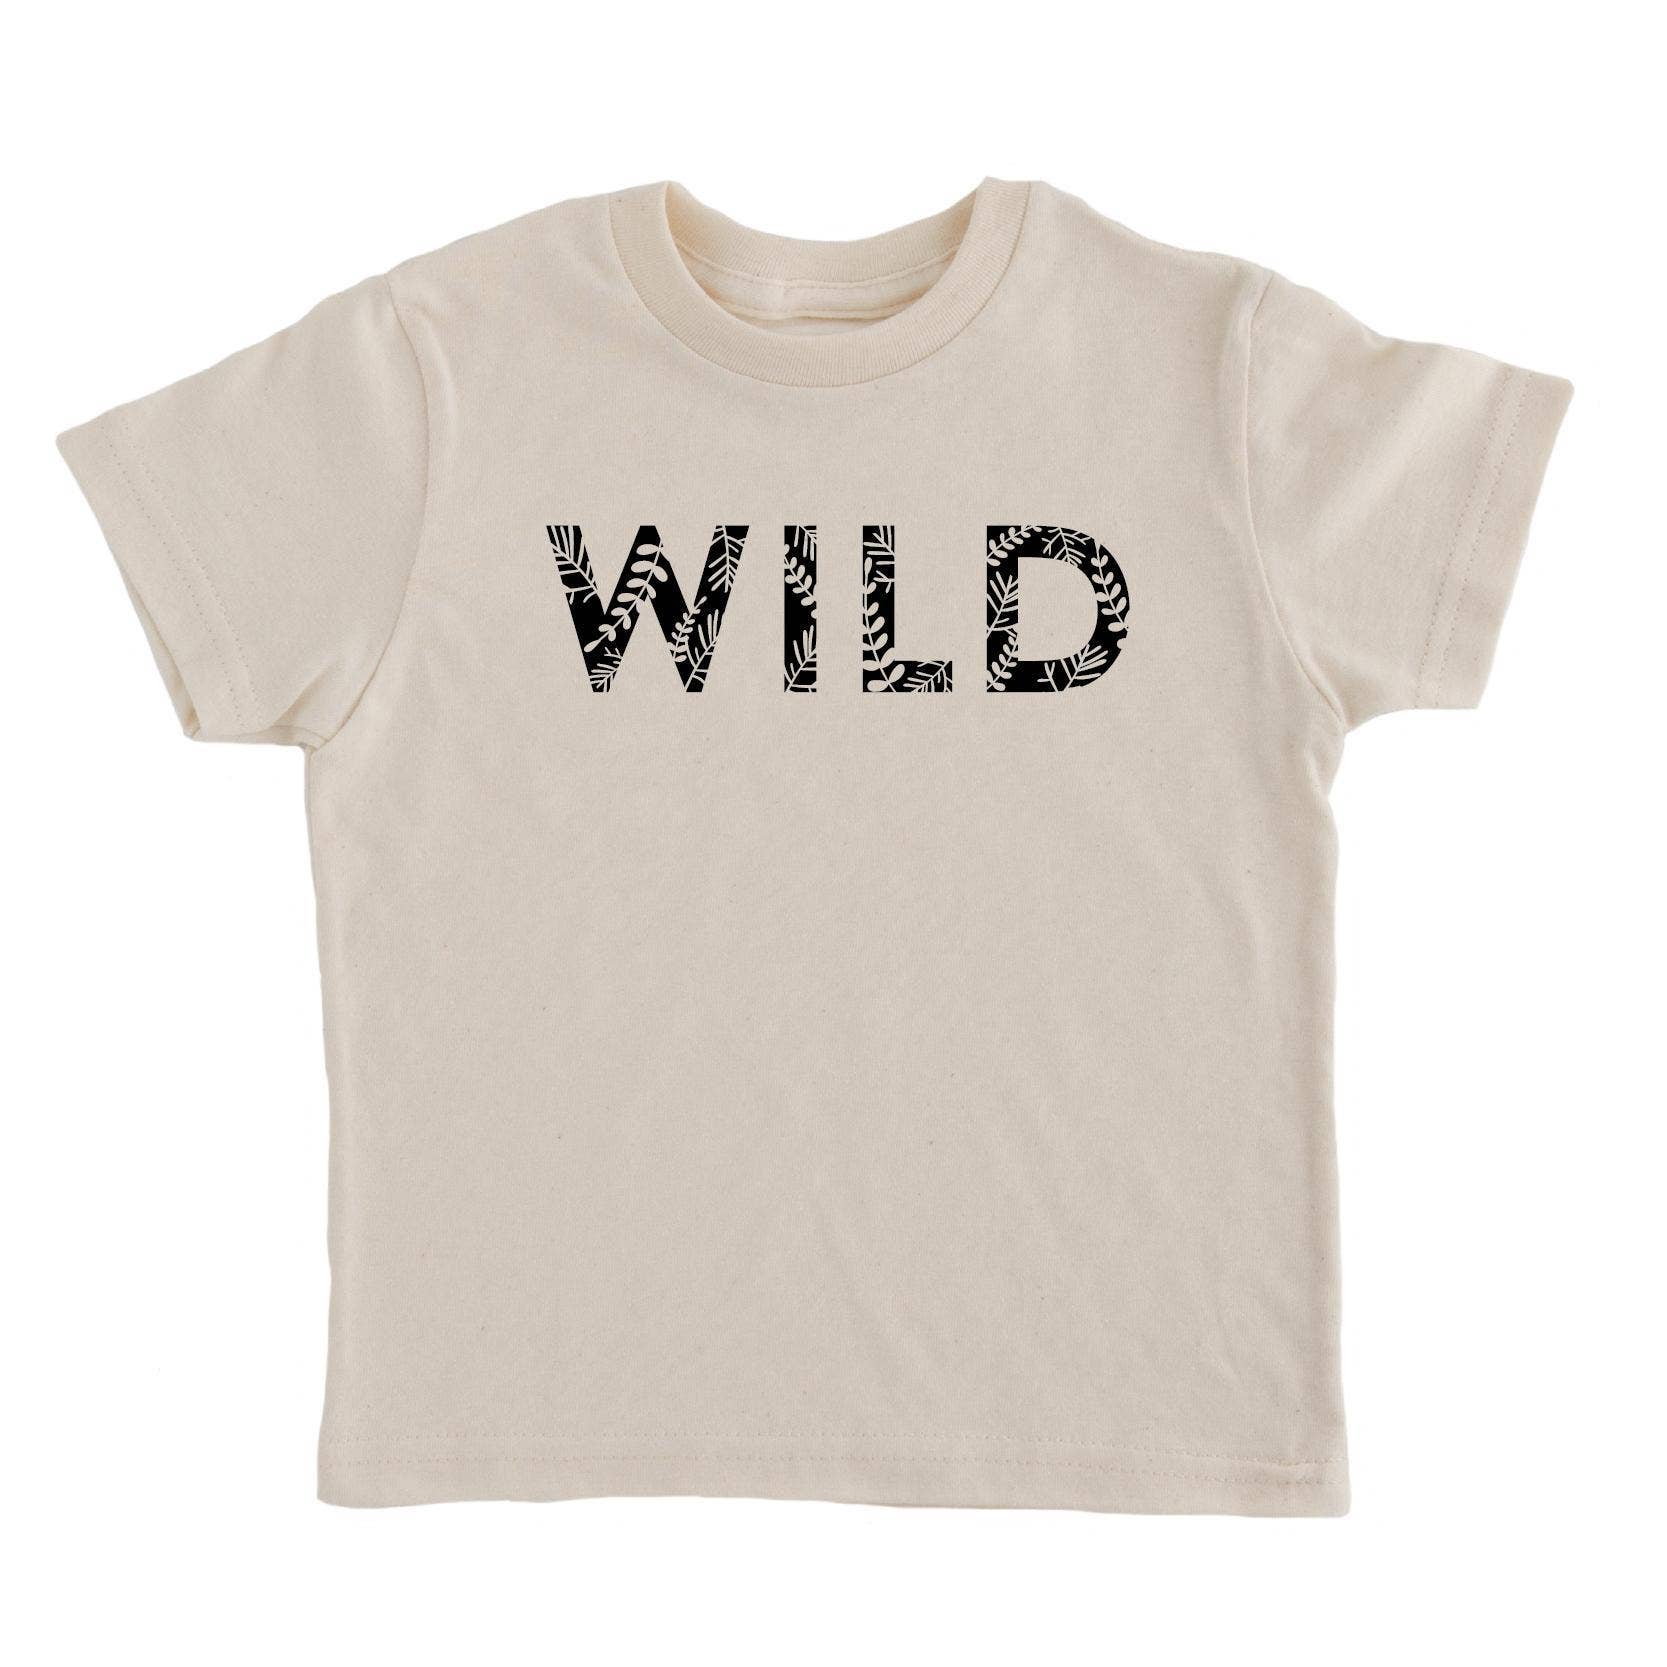 Wild Shirt - Kids Shirts Nature Supply Co   